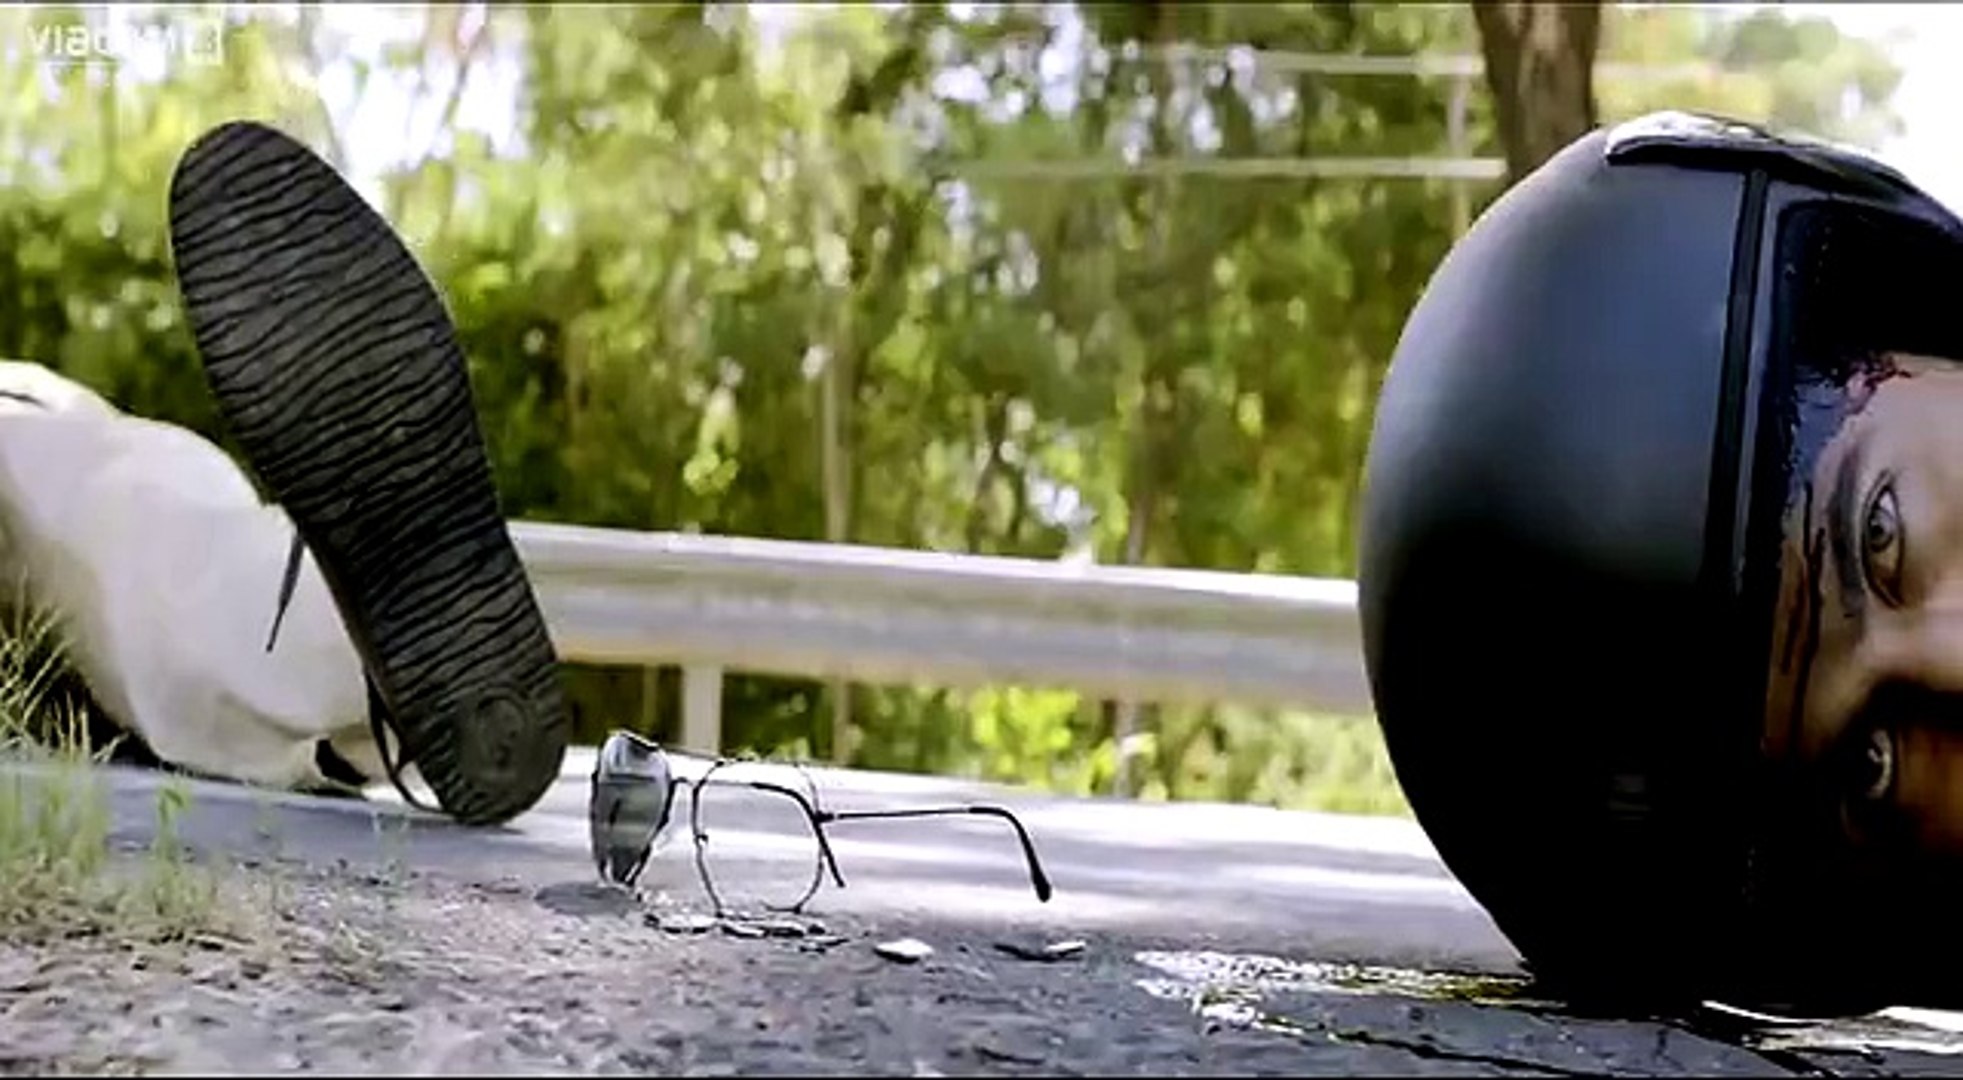 Force 2 upcoming Indian action thriller film Trailer  |John Abraham|Sonakshi Sinha| Full HD